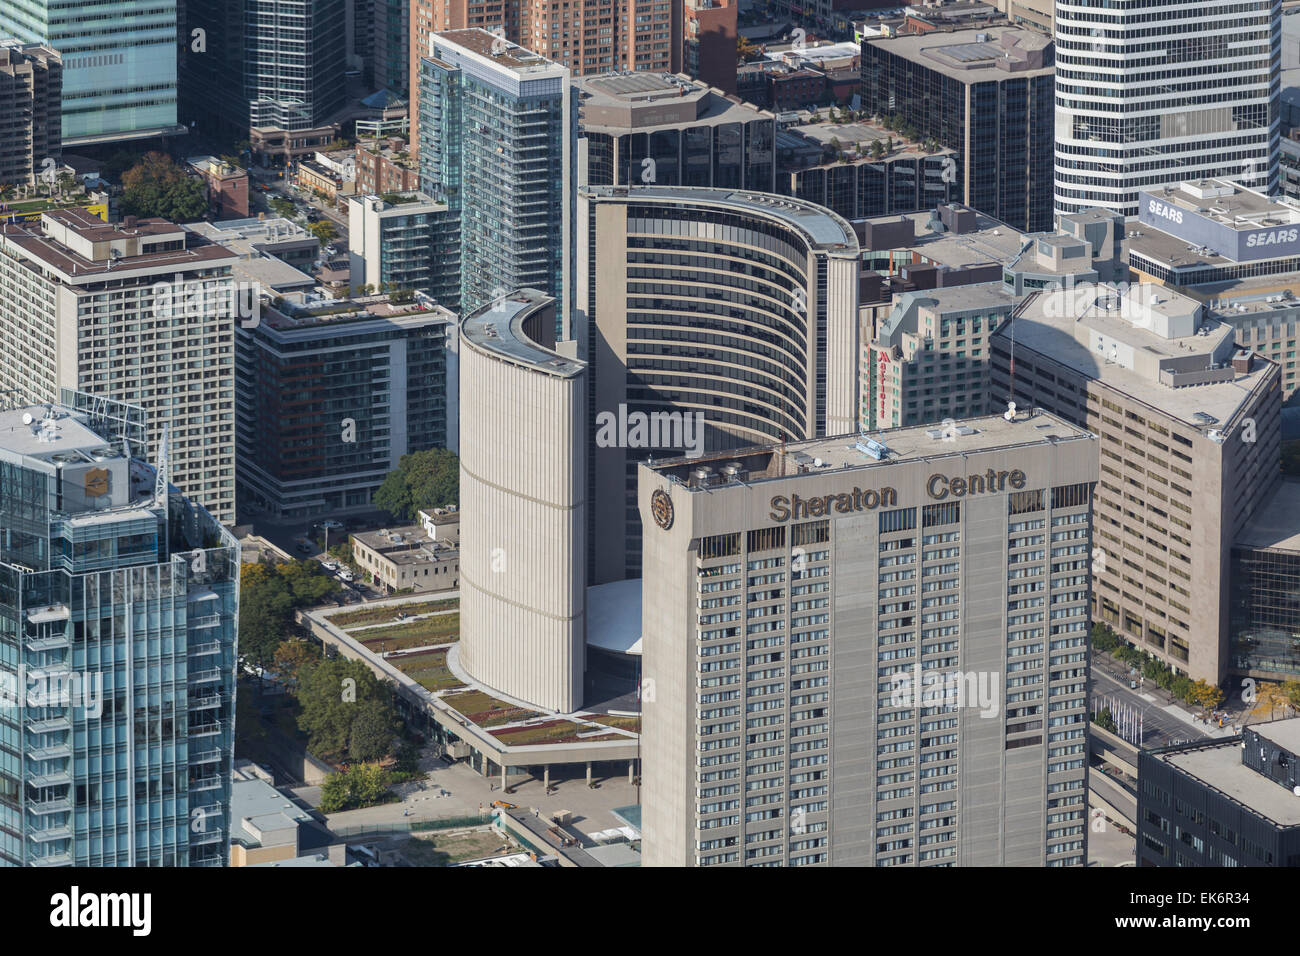 New City Hall from the CN Tower, Toronto, Ontario, Canada Stock Photo